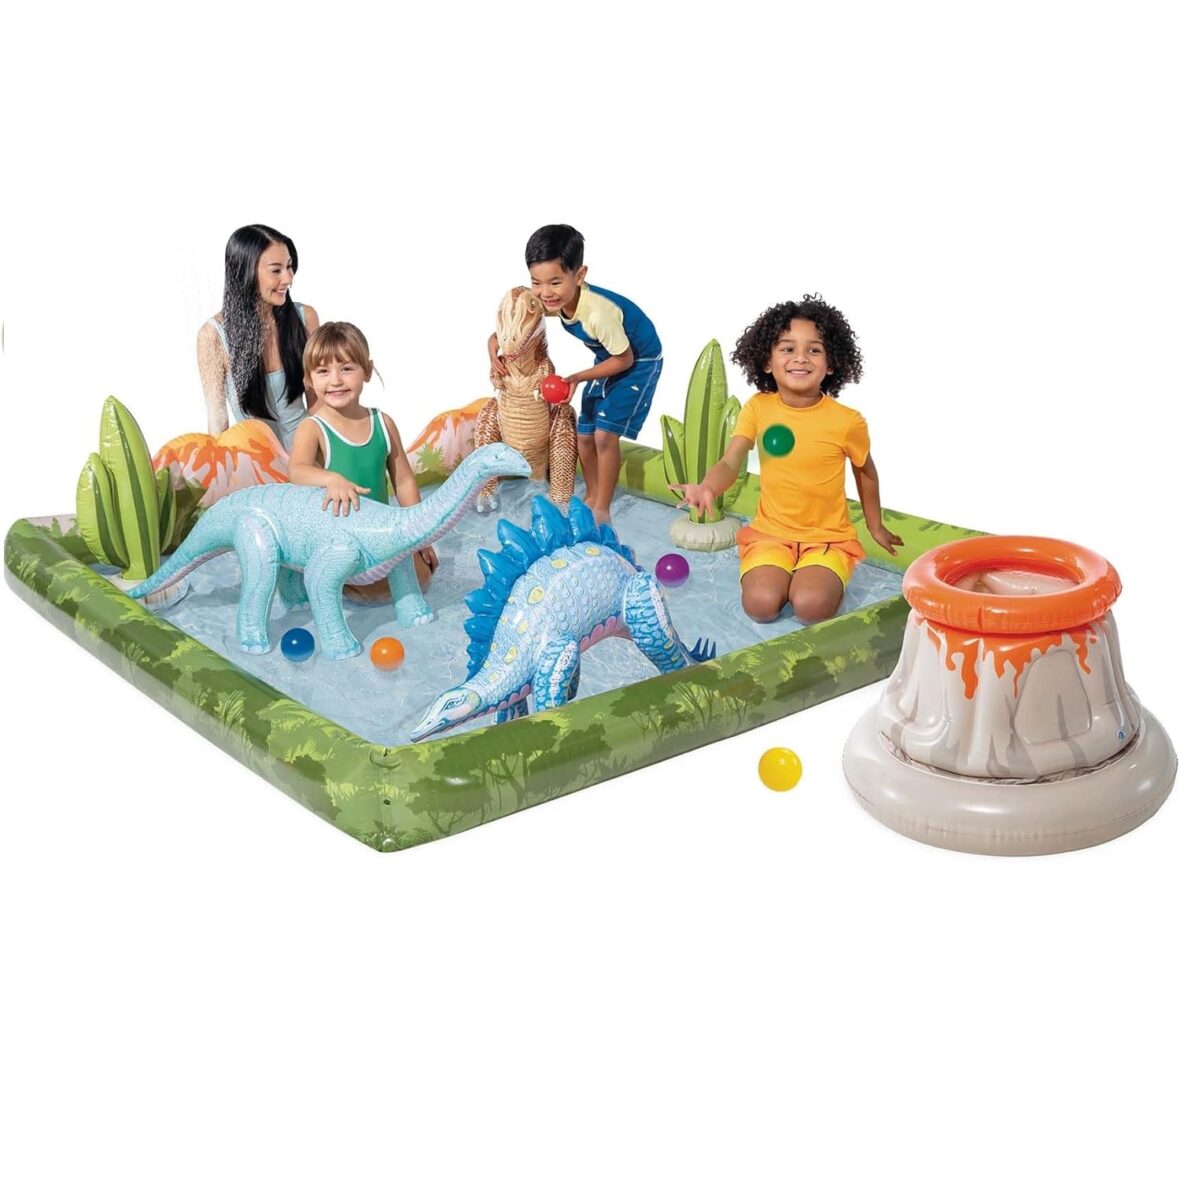 Intex Jurassic Adventure Play Center Pool -56132.2